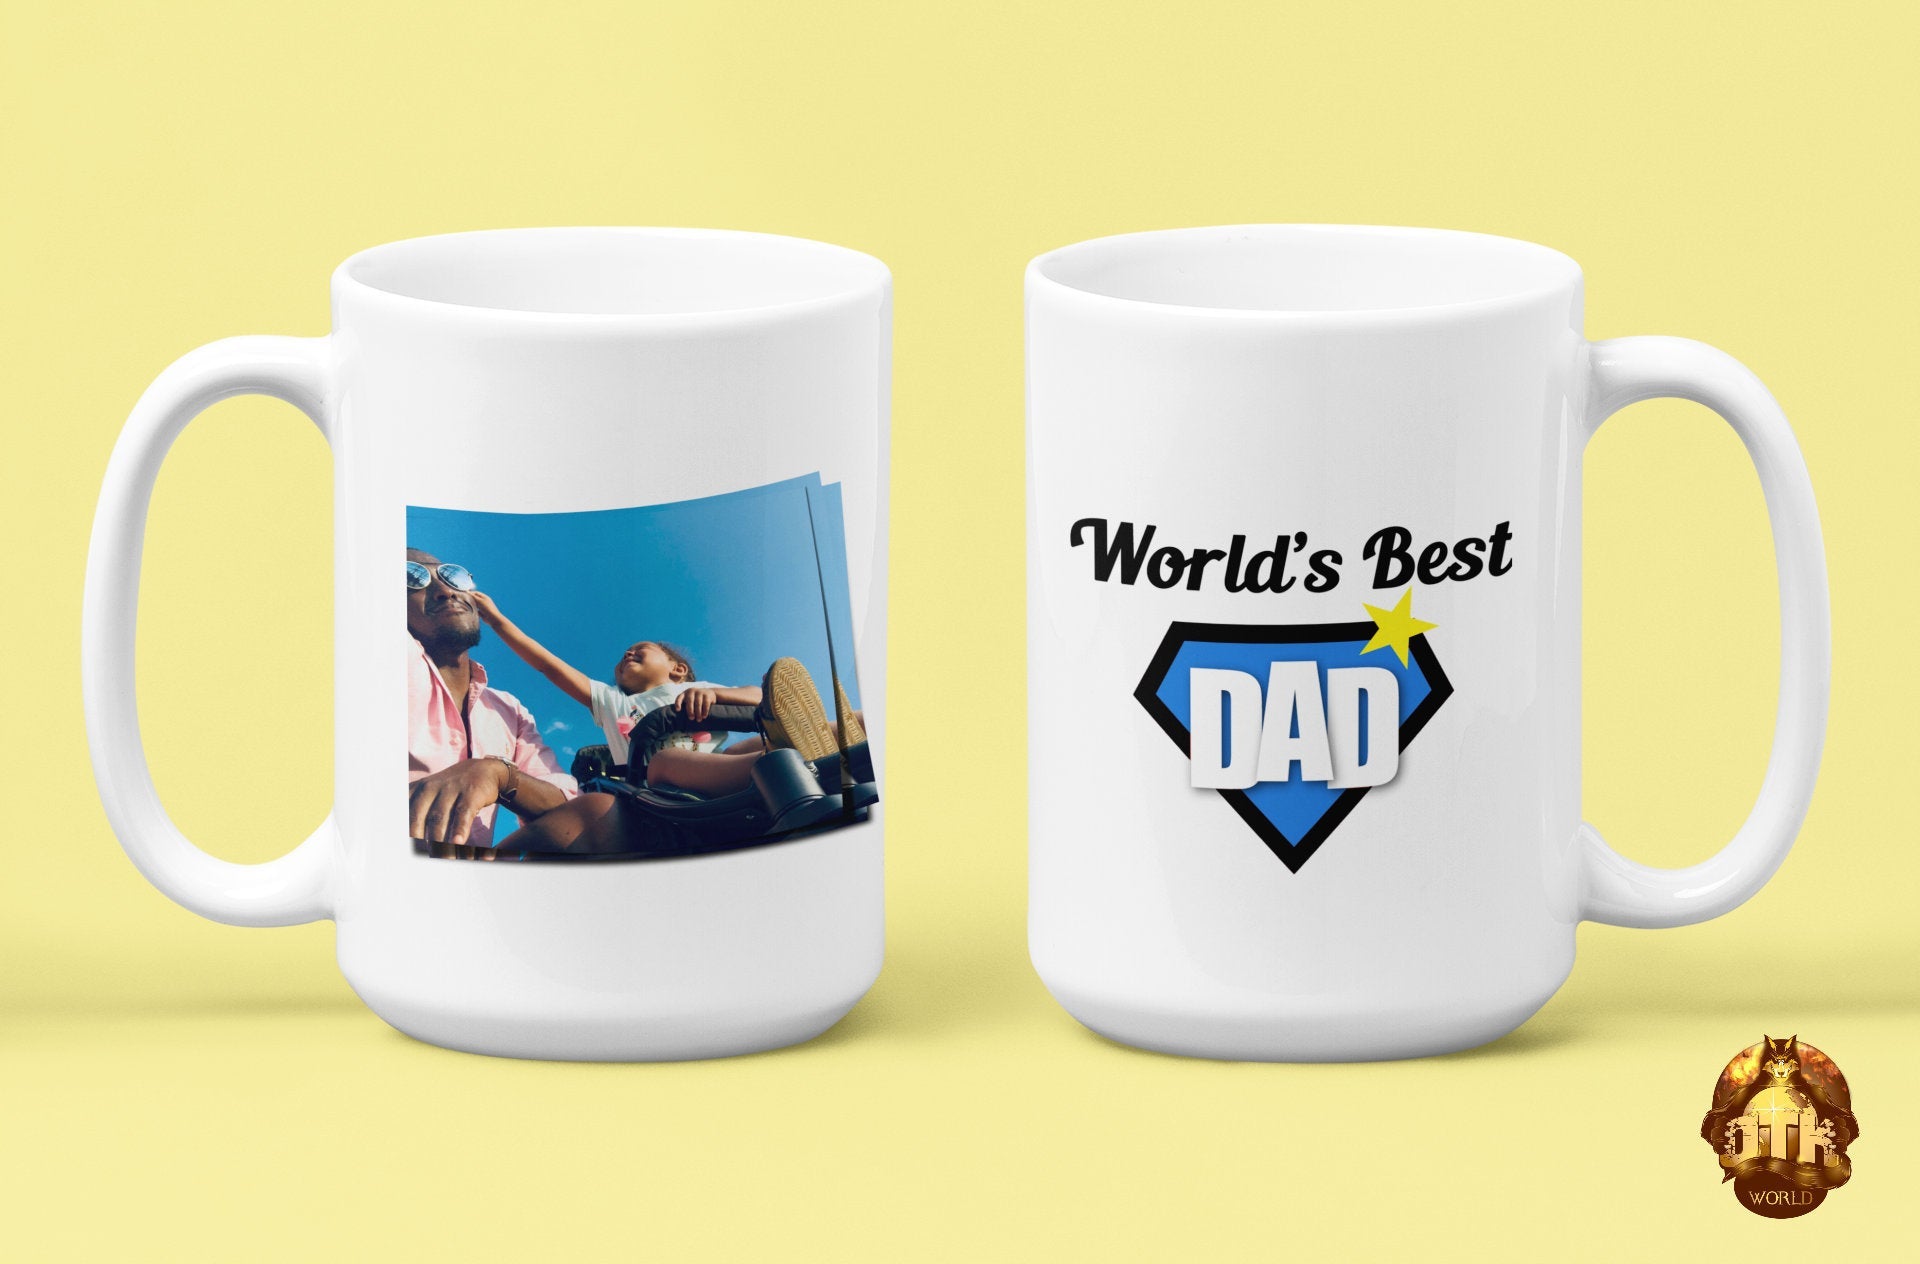 Worlds Best Dad Coffee Mug